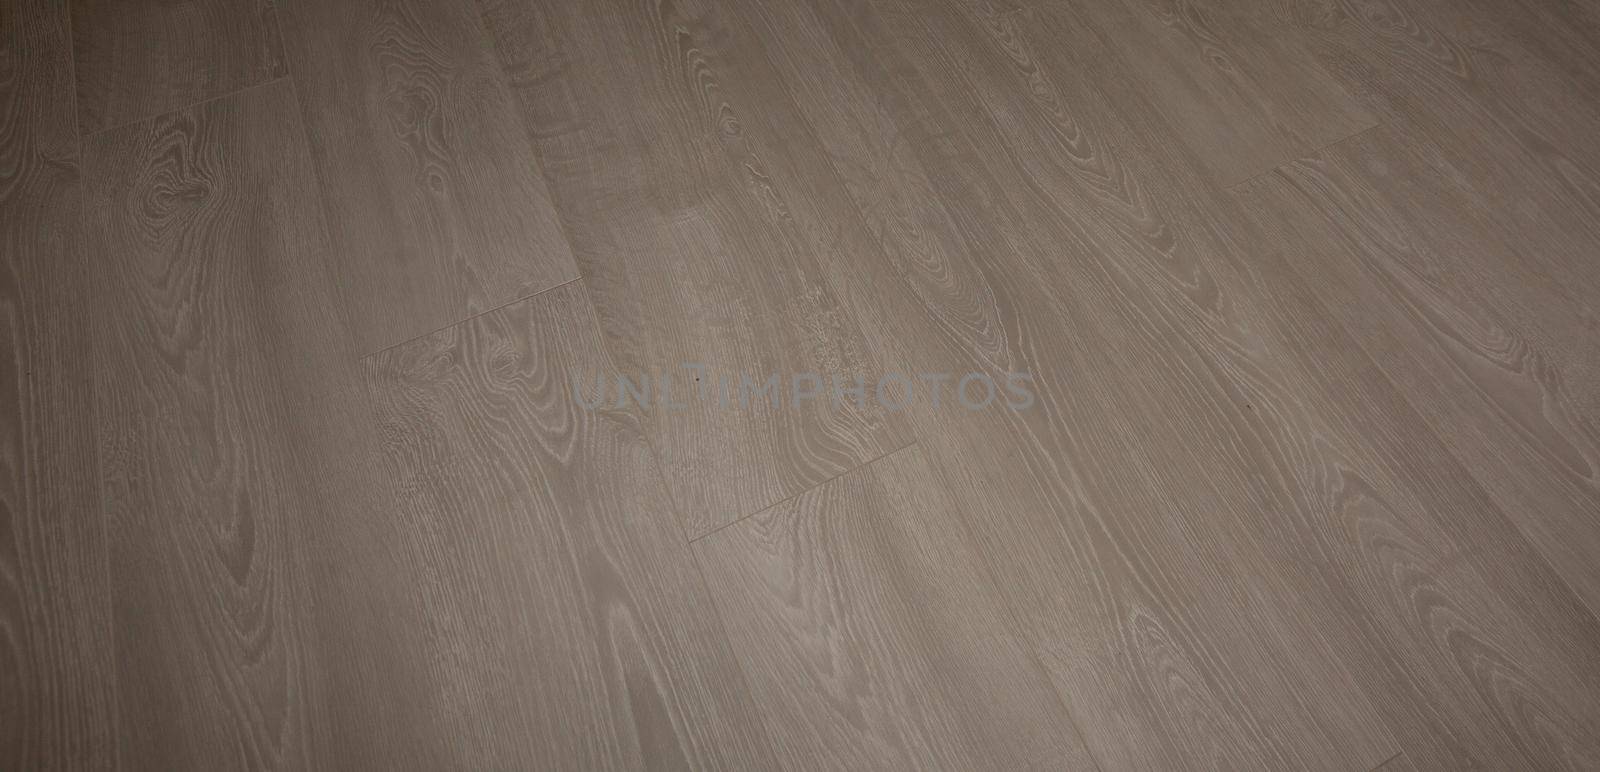 White wooden parquet flooring texture. Horizontal seamless wooden background by Andelov13